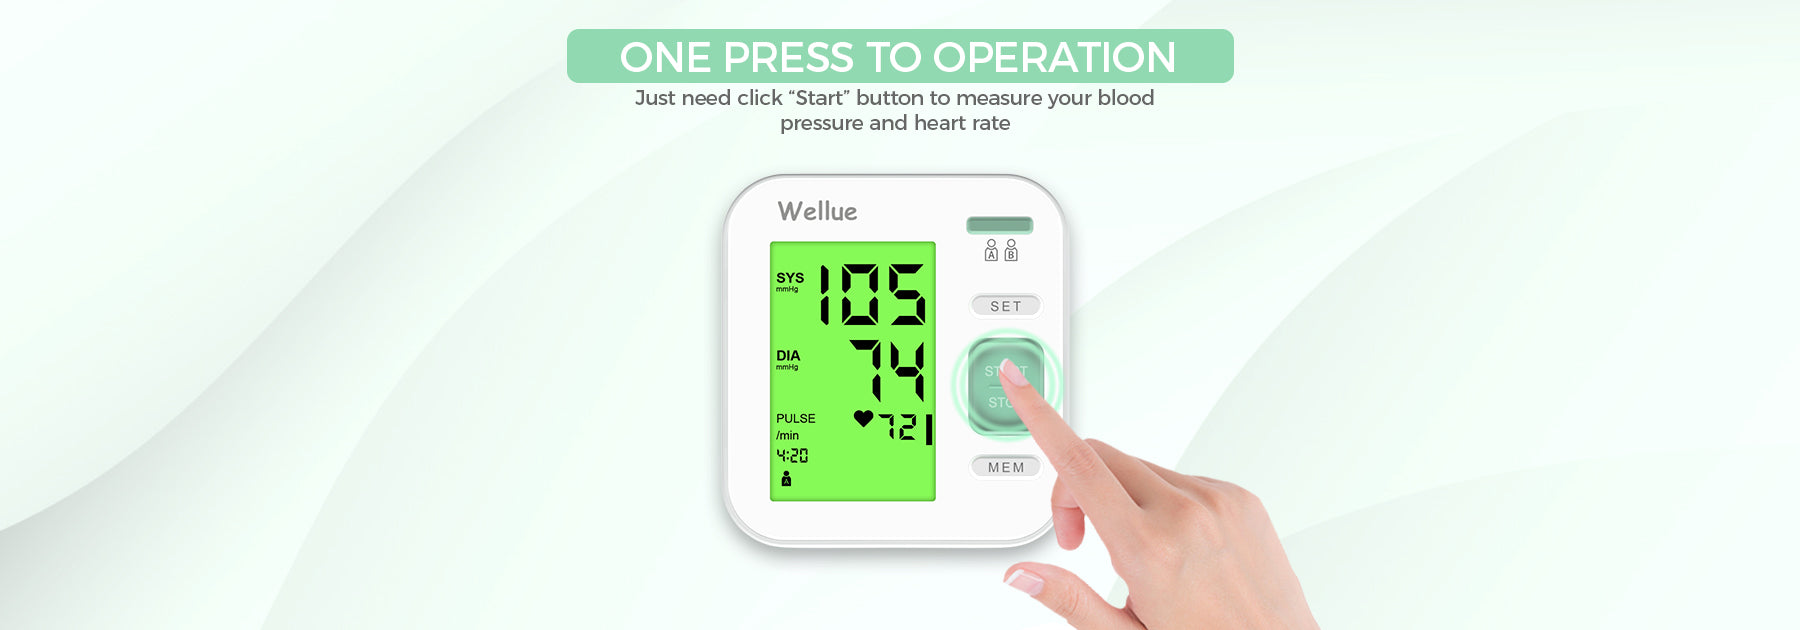 Want to buy iHealth Track blood pressure monitor? - Blood pressure monitor .shop